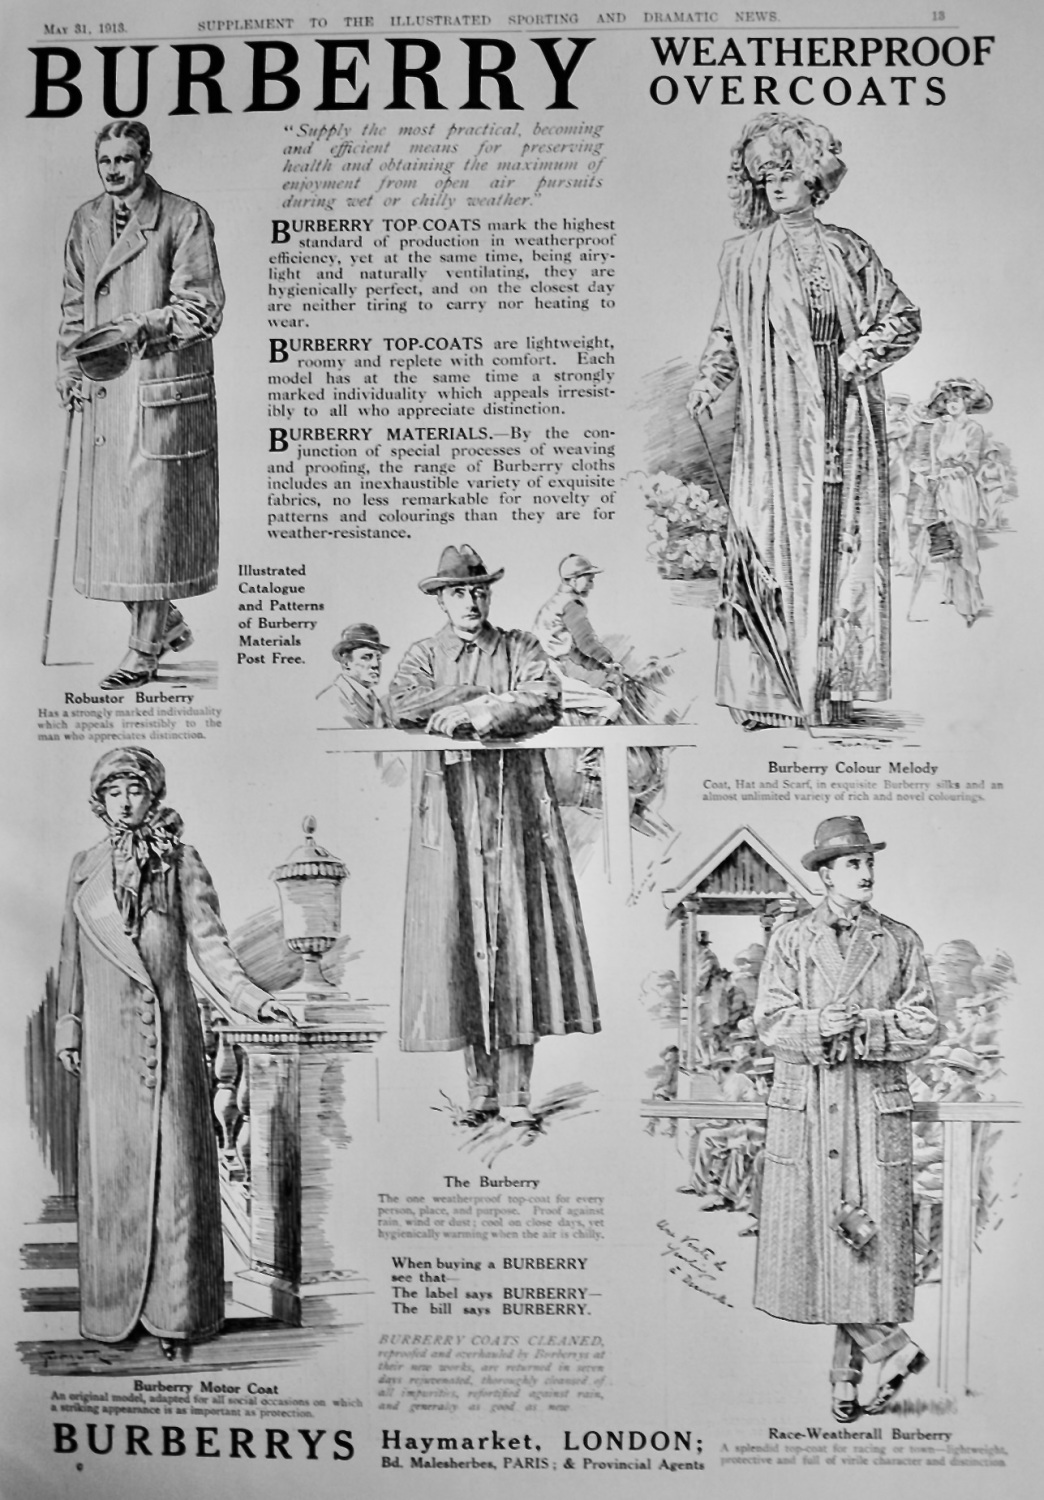 Burberry Weatherproof Overcoats.  1913.